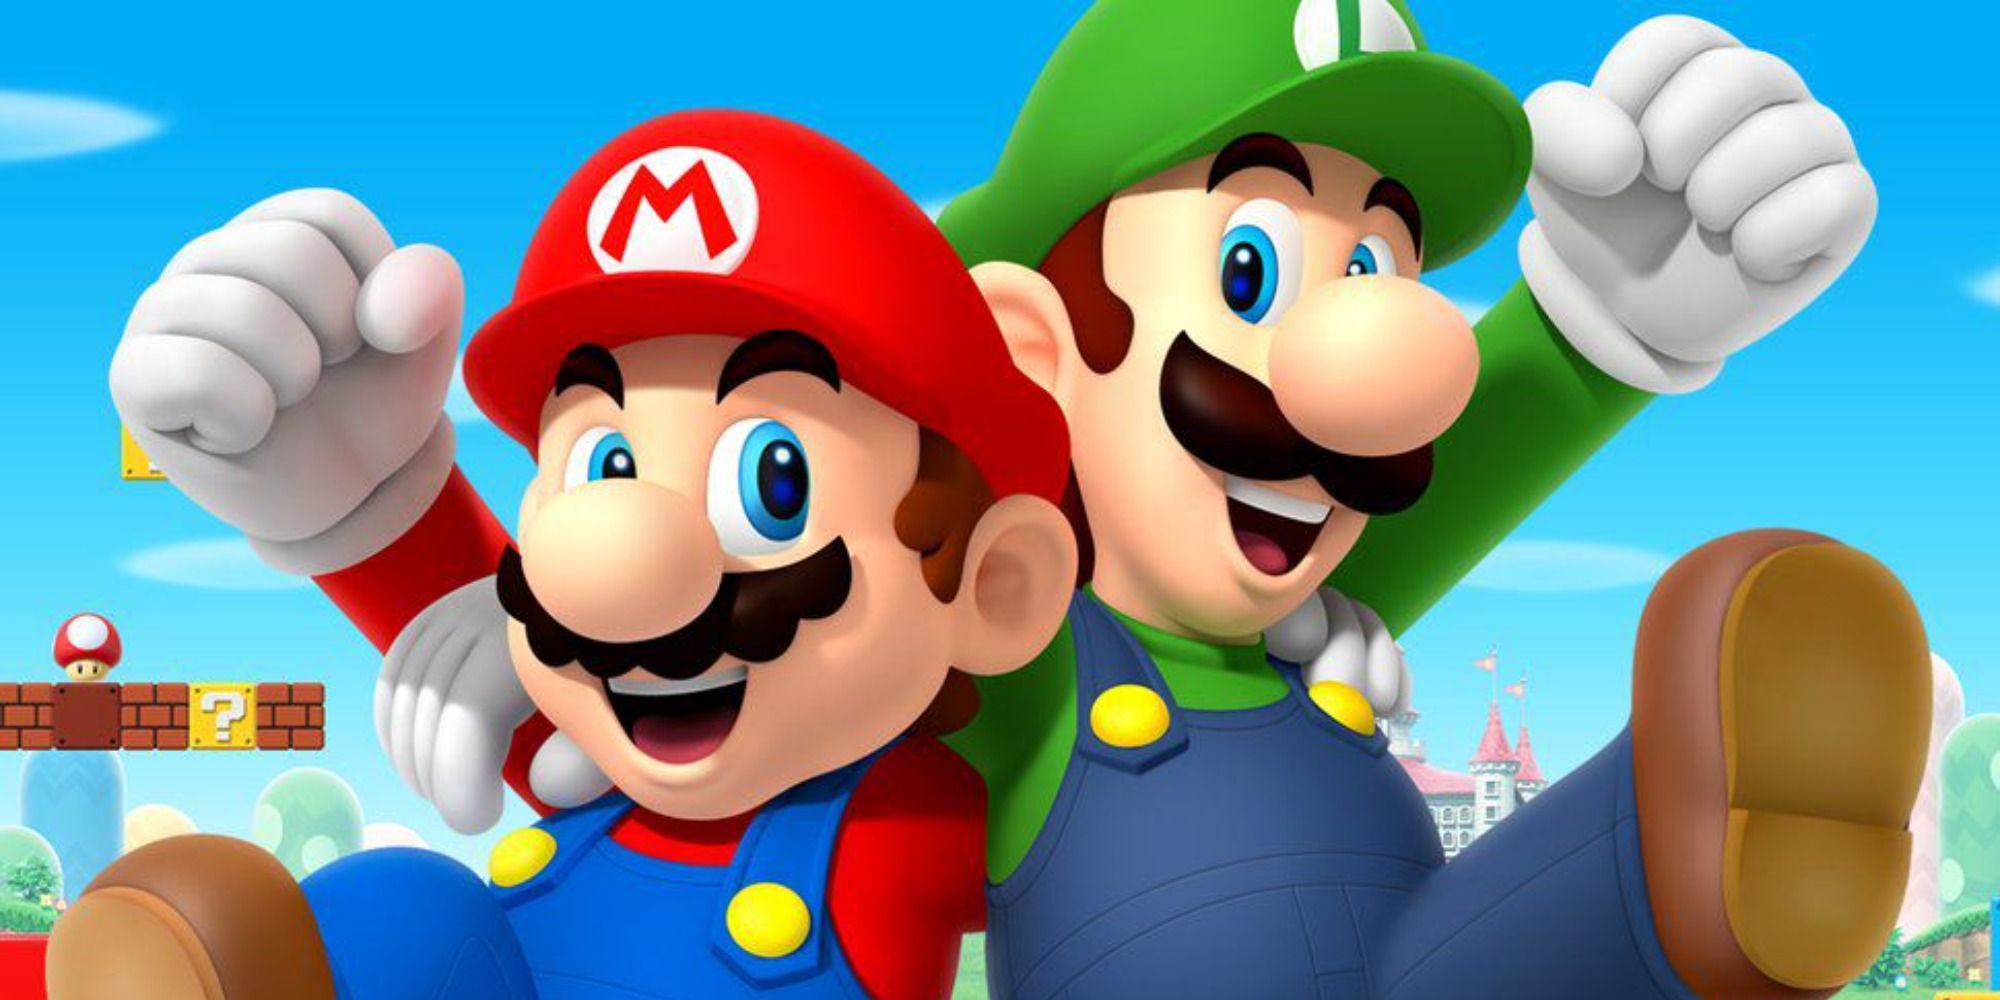 Mario & Luigi holding each other in a "buddy-buddy' fashion. Brotherly